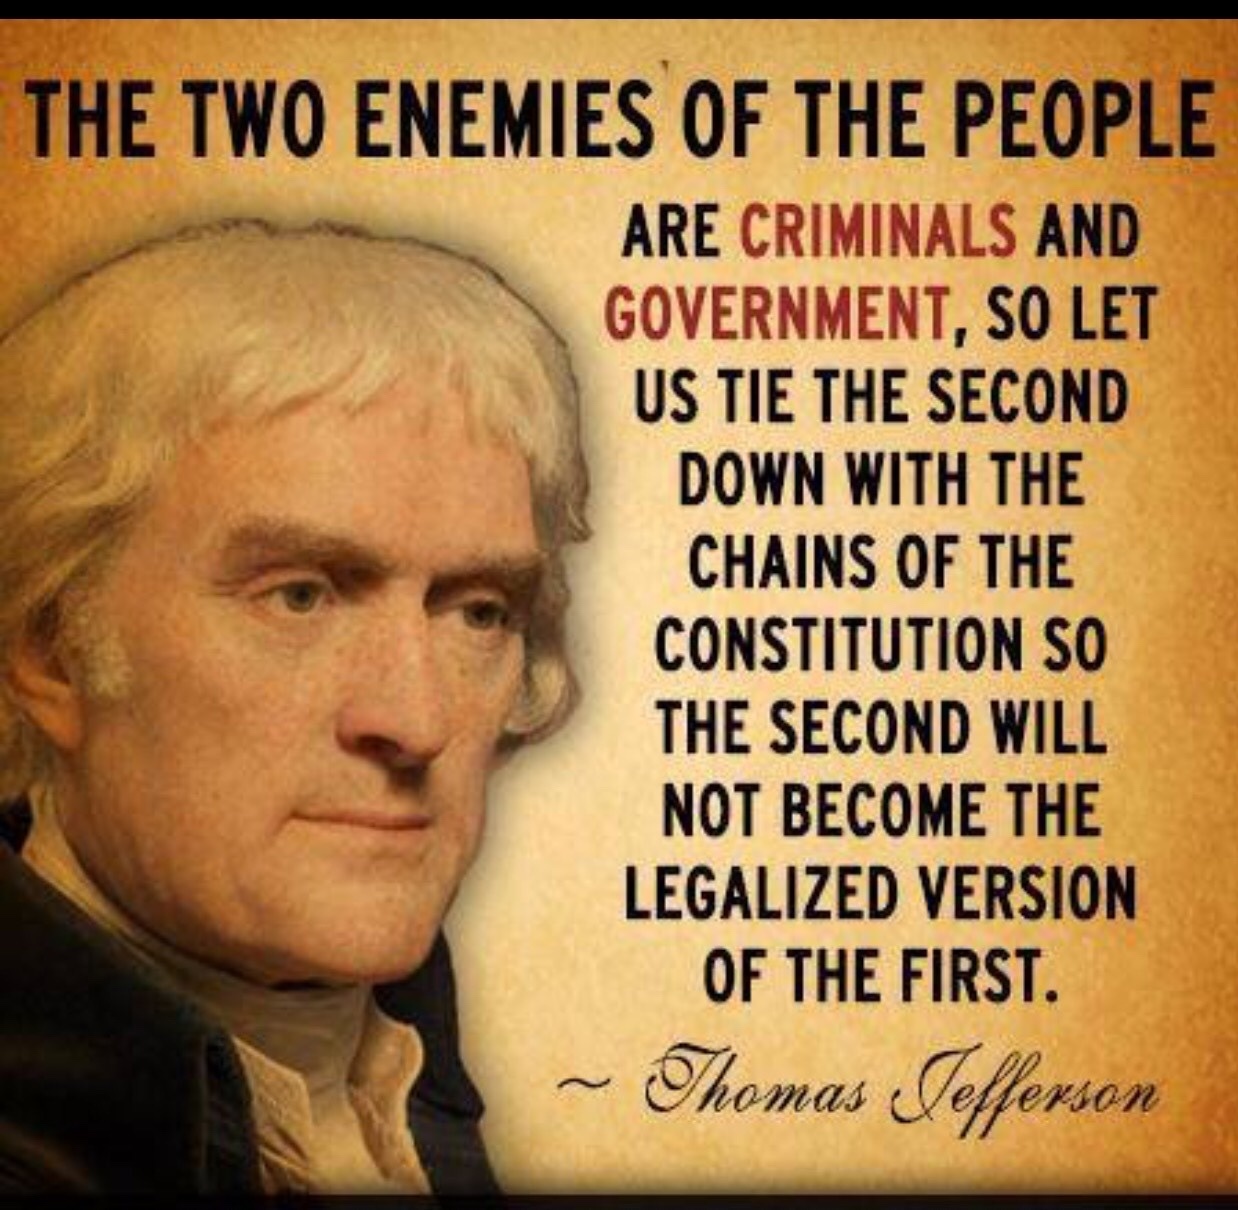 Thomas Jefferson quote - Meme by SyphilisLover223 :) Memedroid